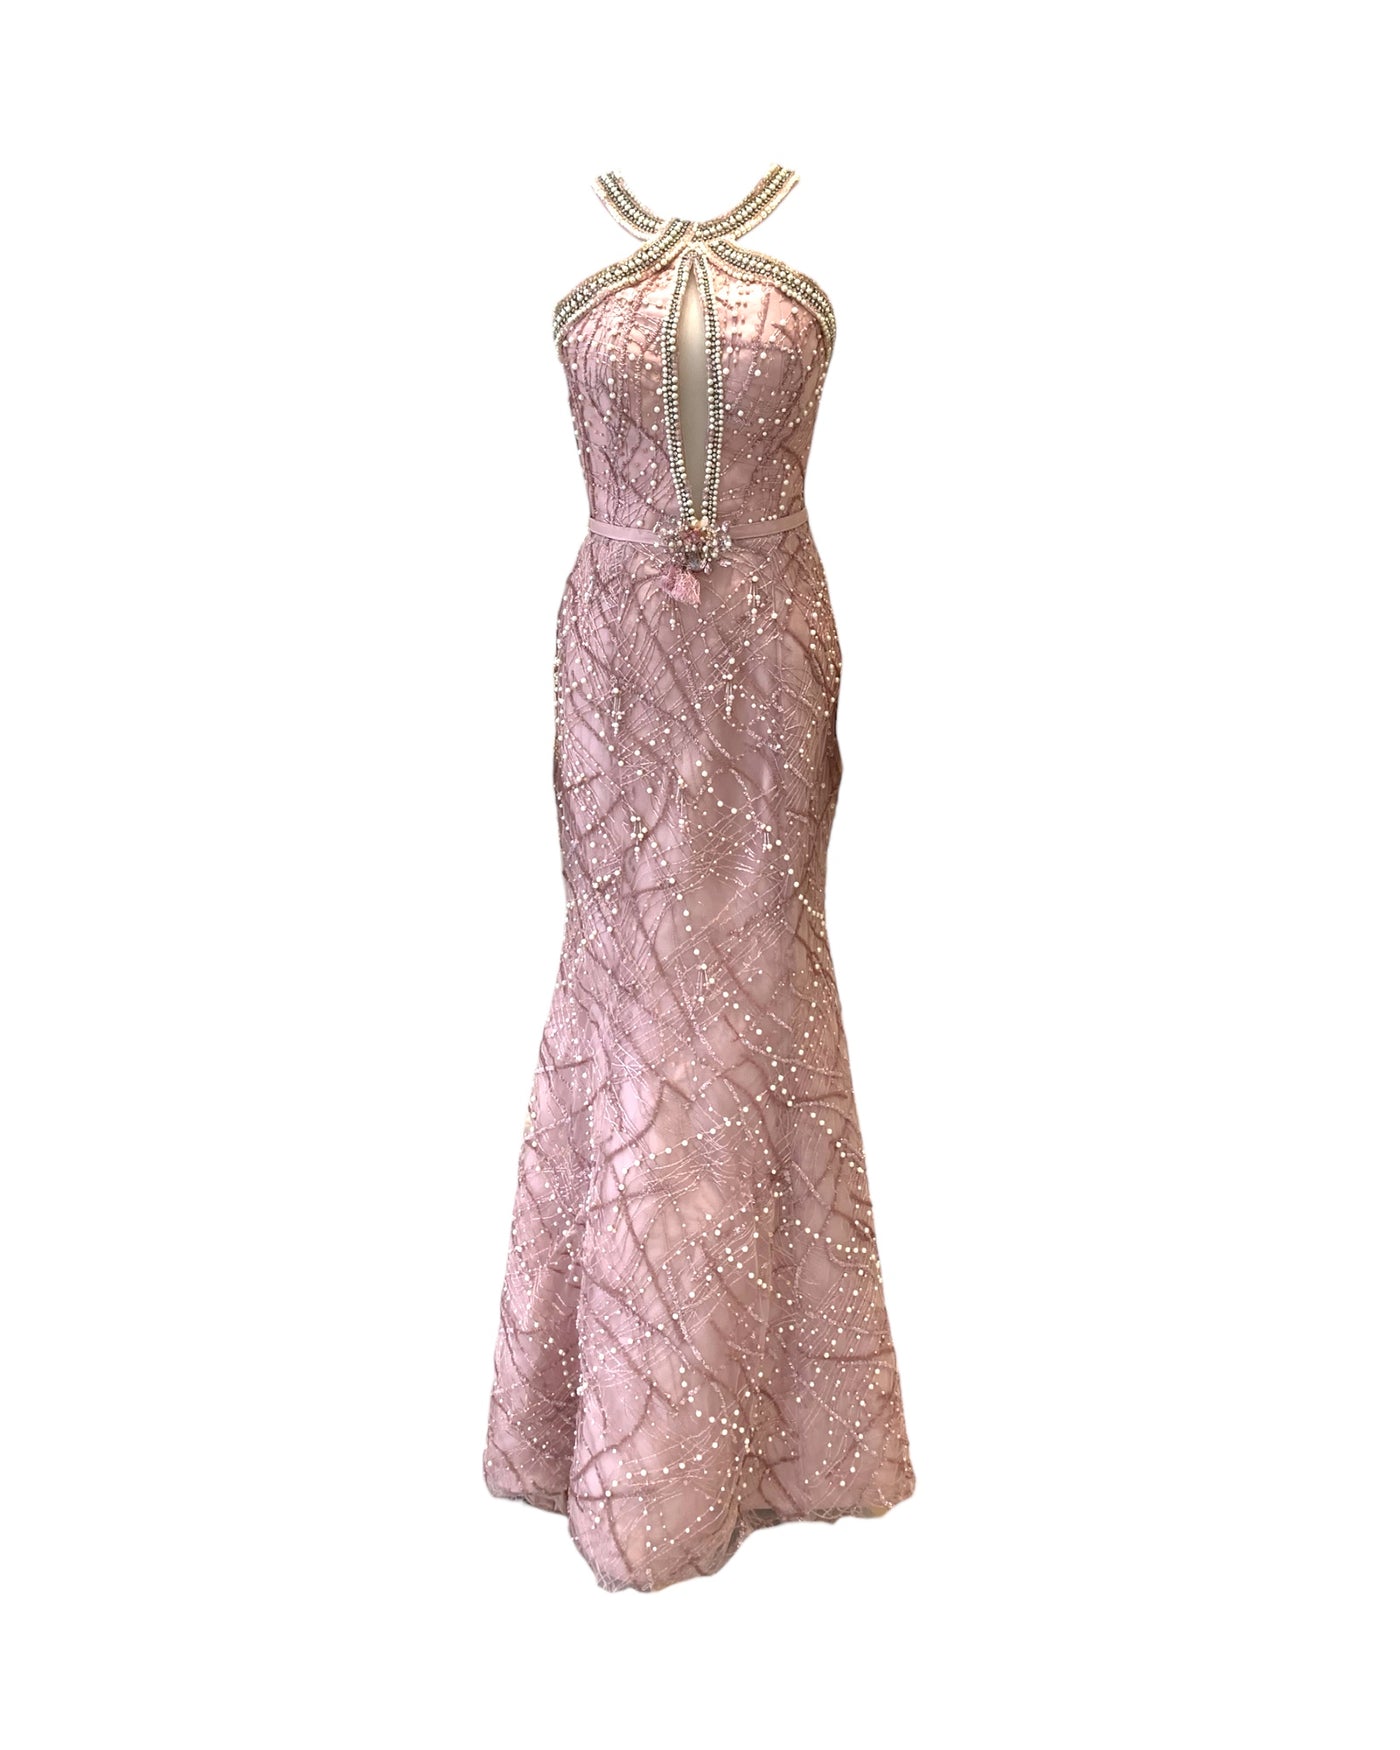 Buy : Winda Halomoan - Dusty Pink Halter Neck Gown